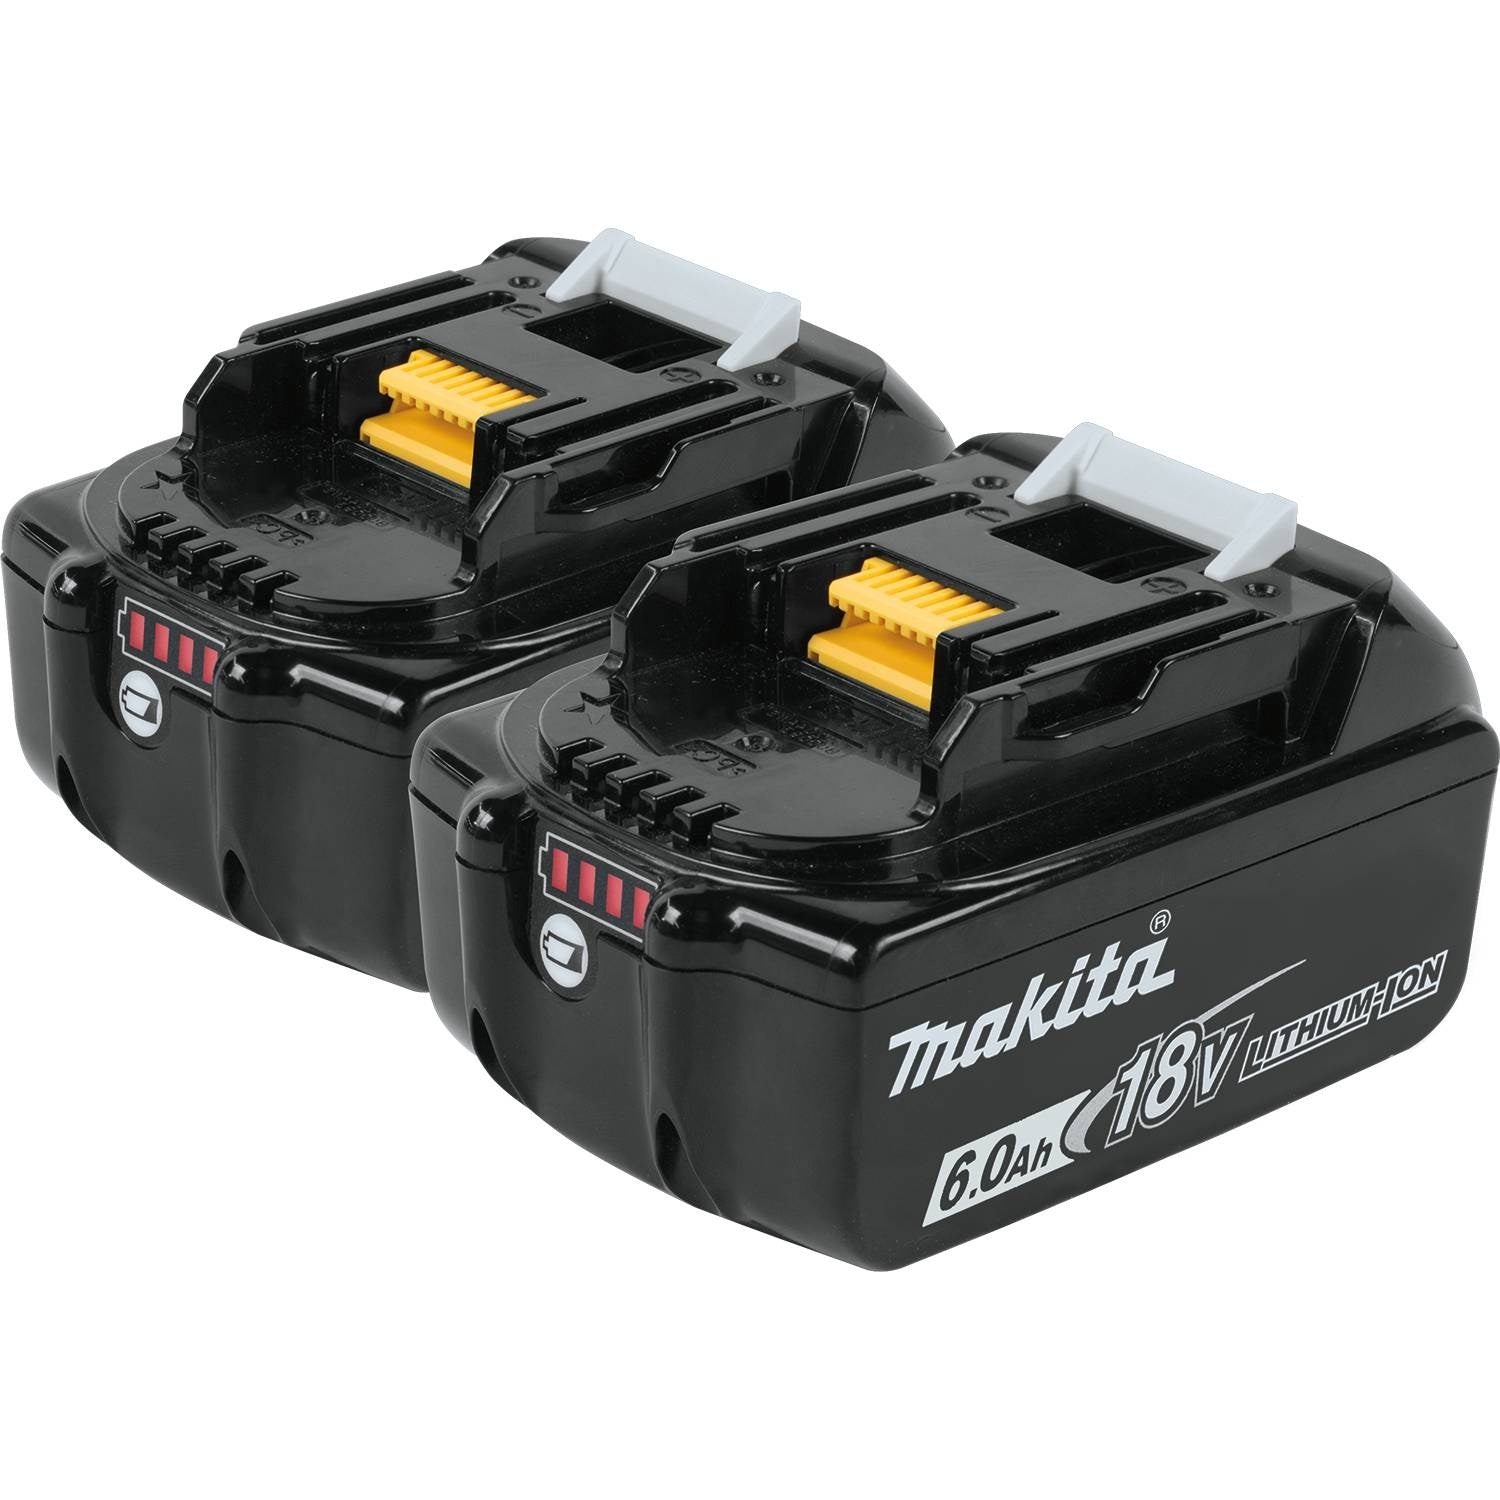 Makita BL1860B-2 18V 6.0 Ah LXT Lithium-Ion Battery 2-Pack